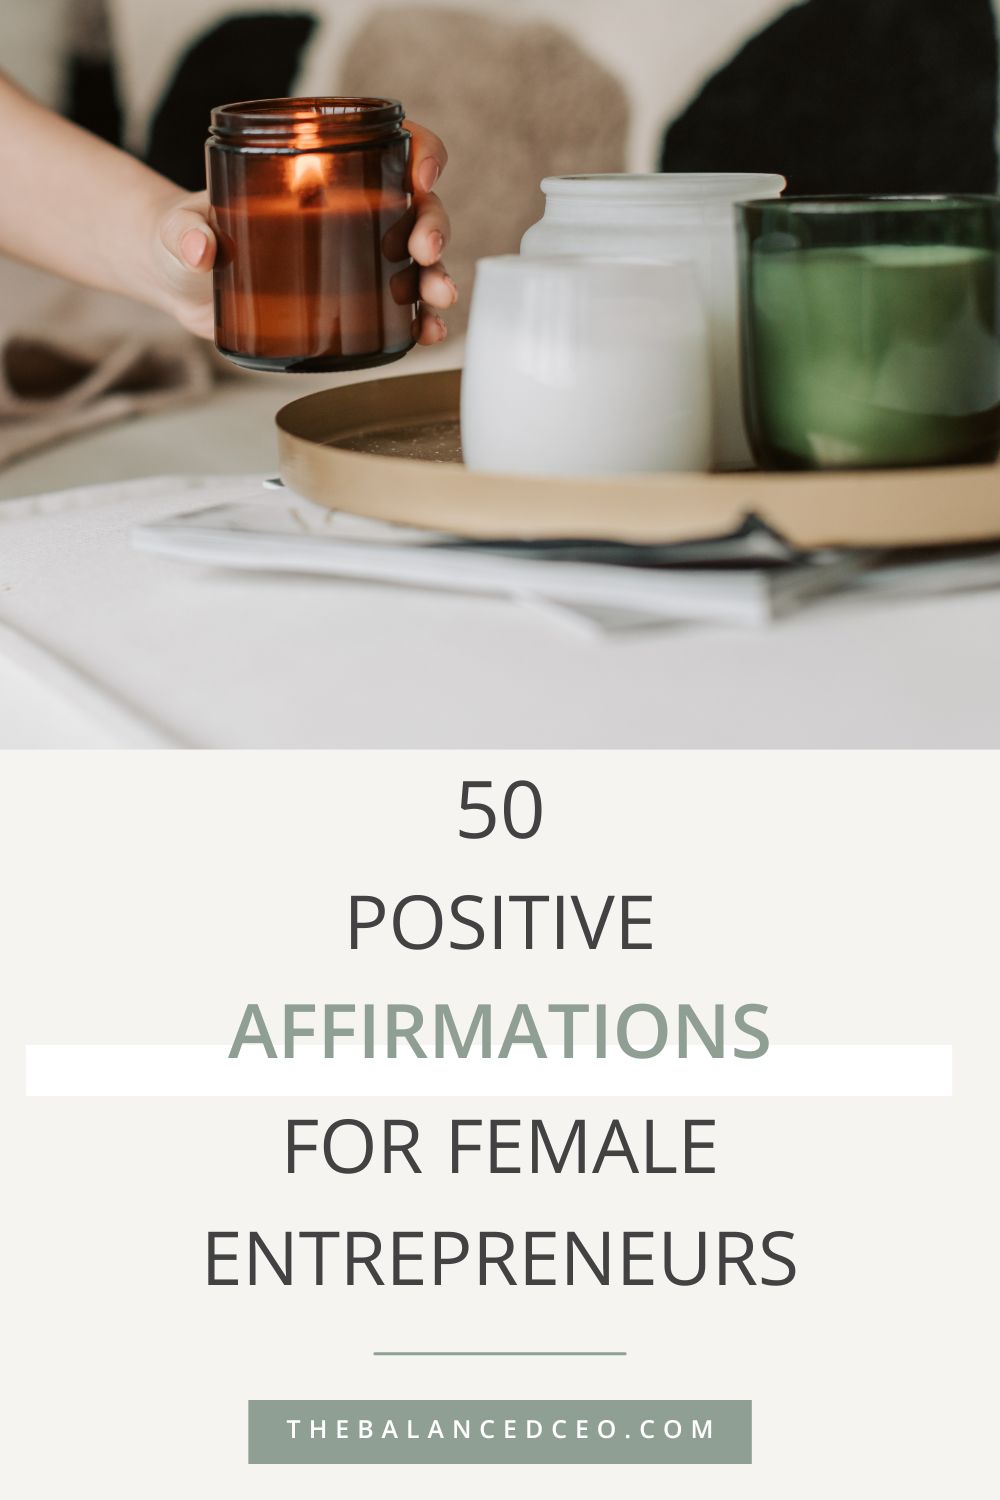 50 Positive Affirmations for Female Entrepreneurs